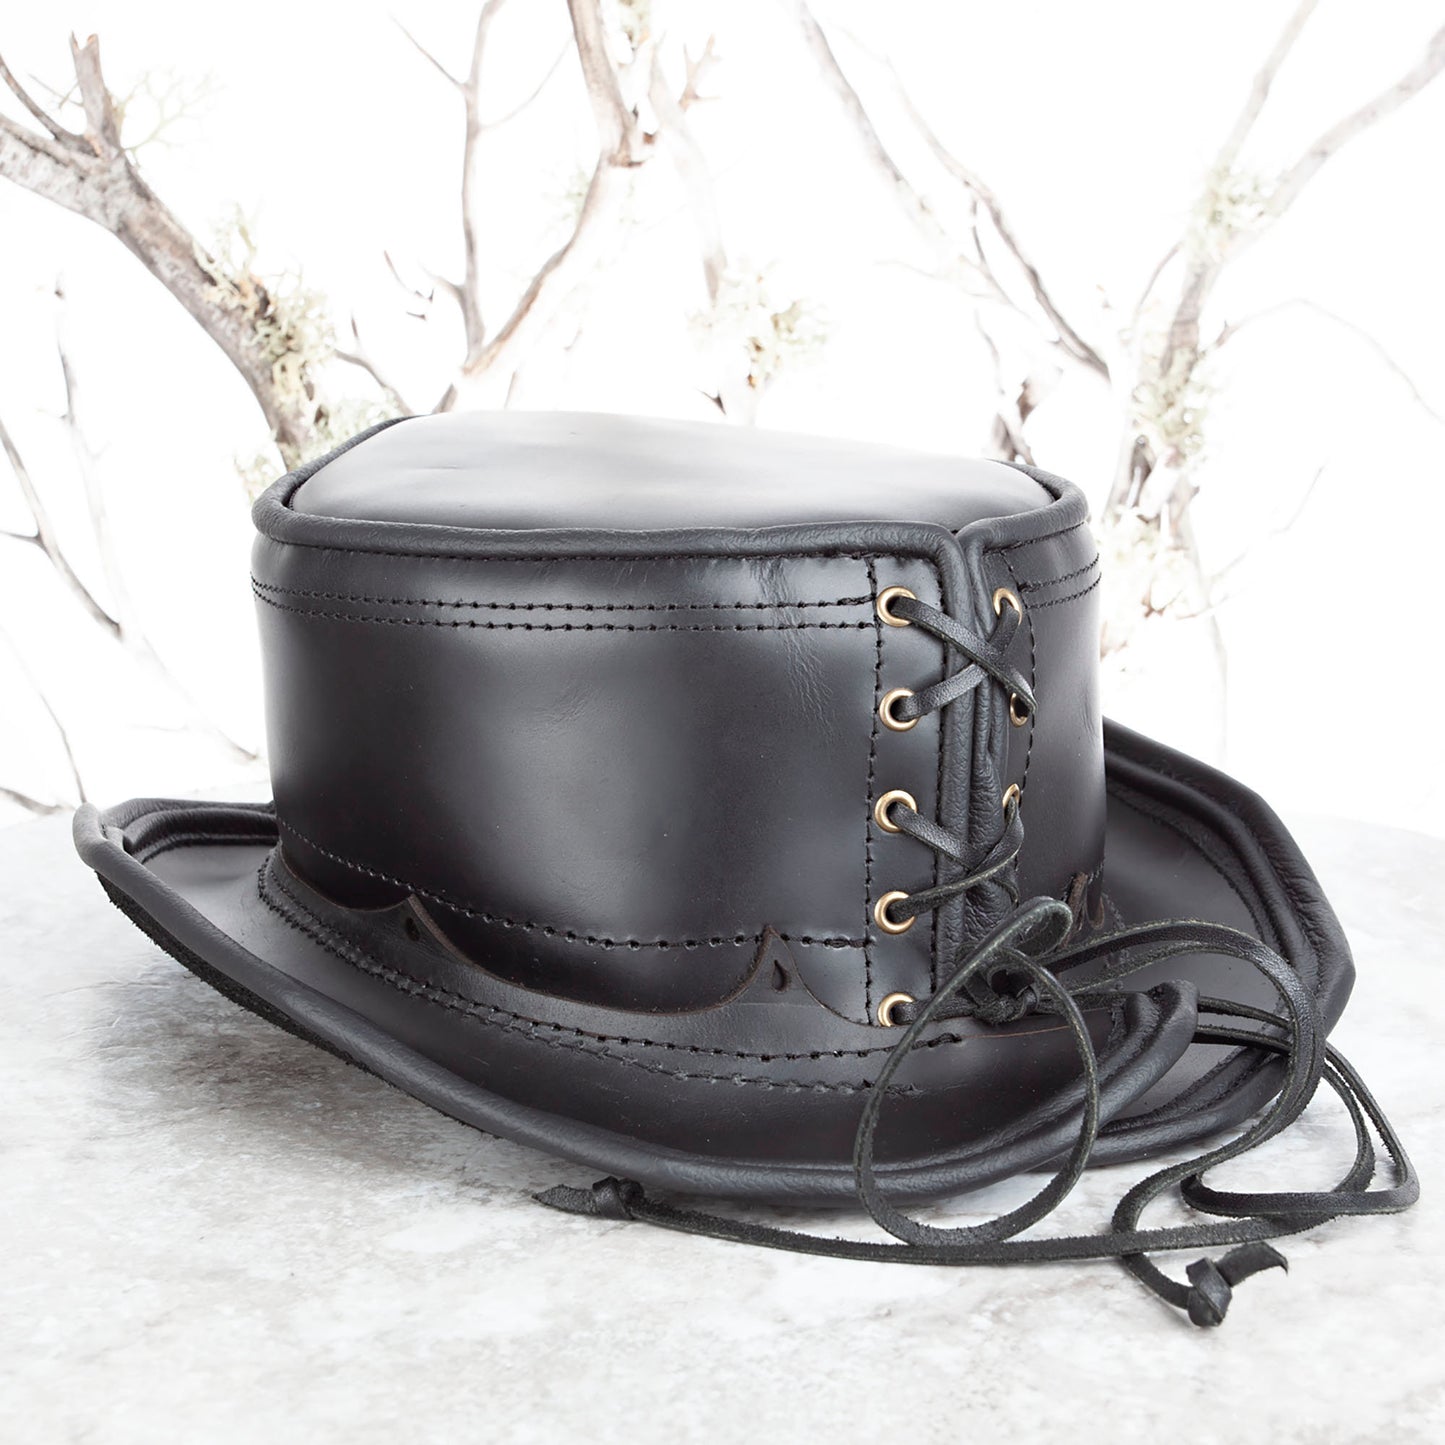 Basic Daunting & Dapper Leather Top Hat | Black